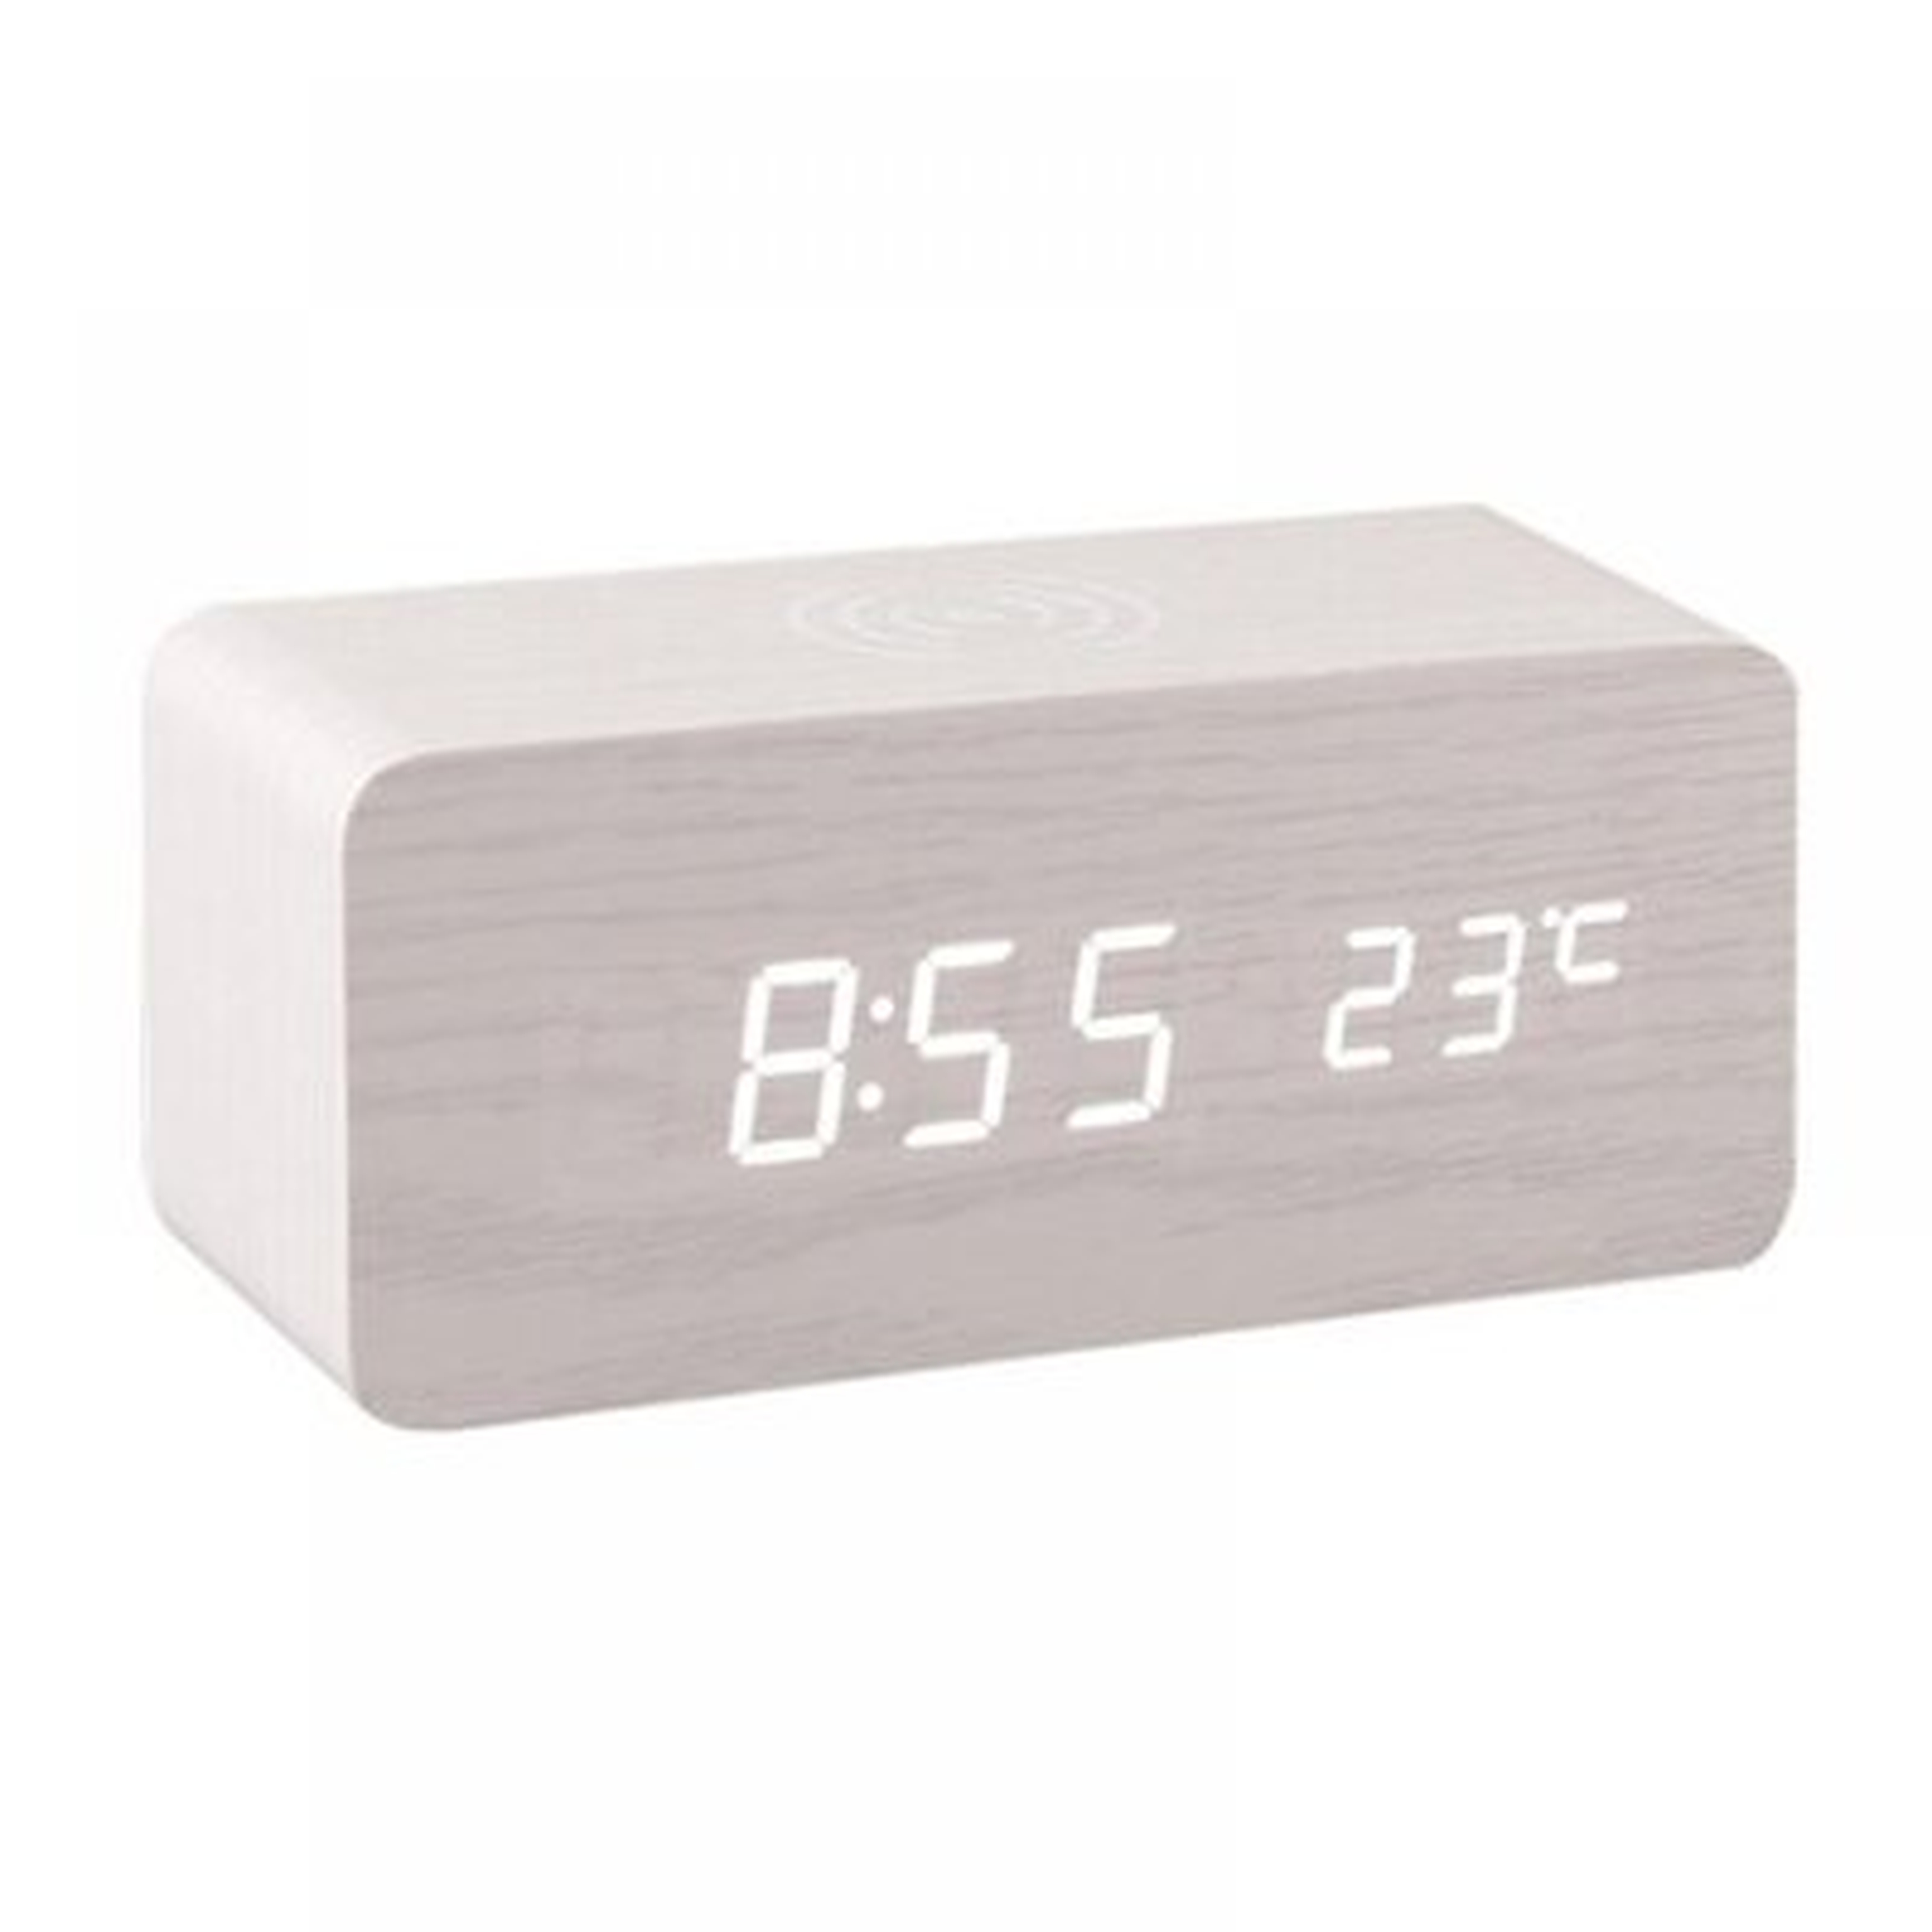 Digital Wooden Alarm Clock With Wireless Charging Function Multifunctional Tabletop Clock - Wayfair